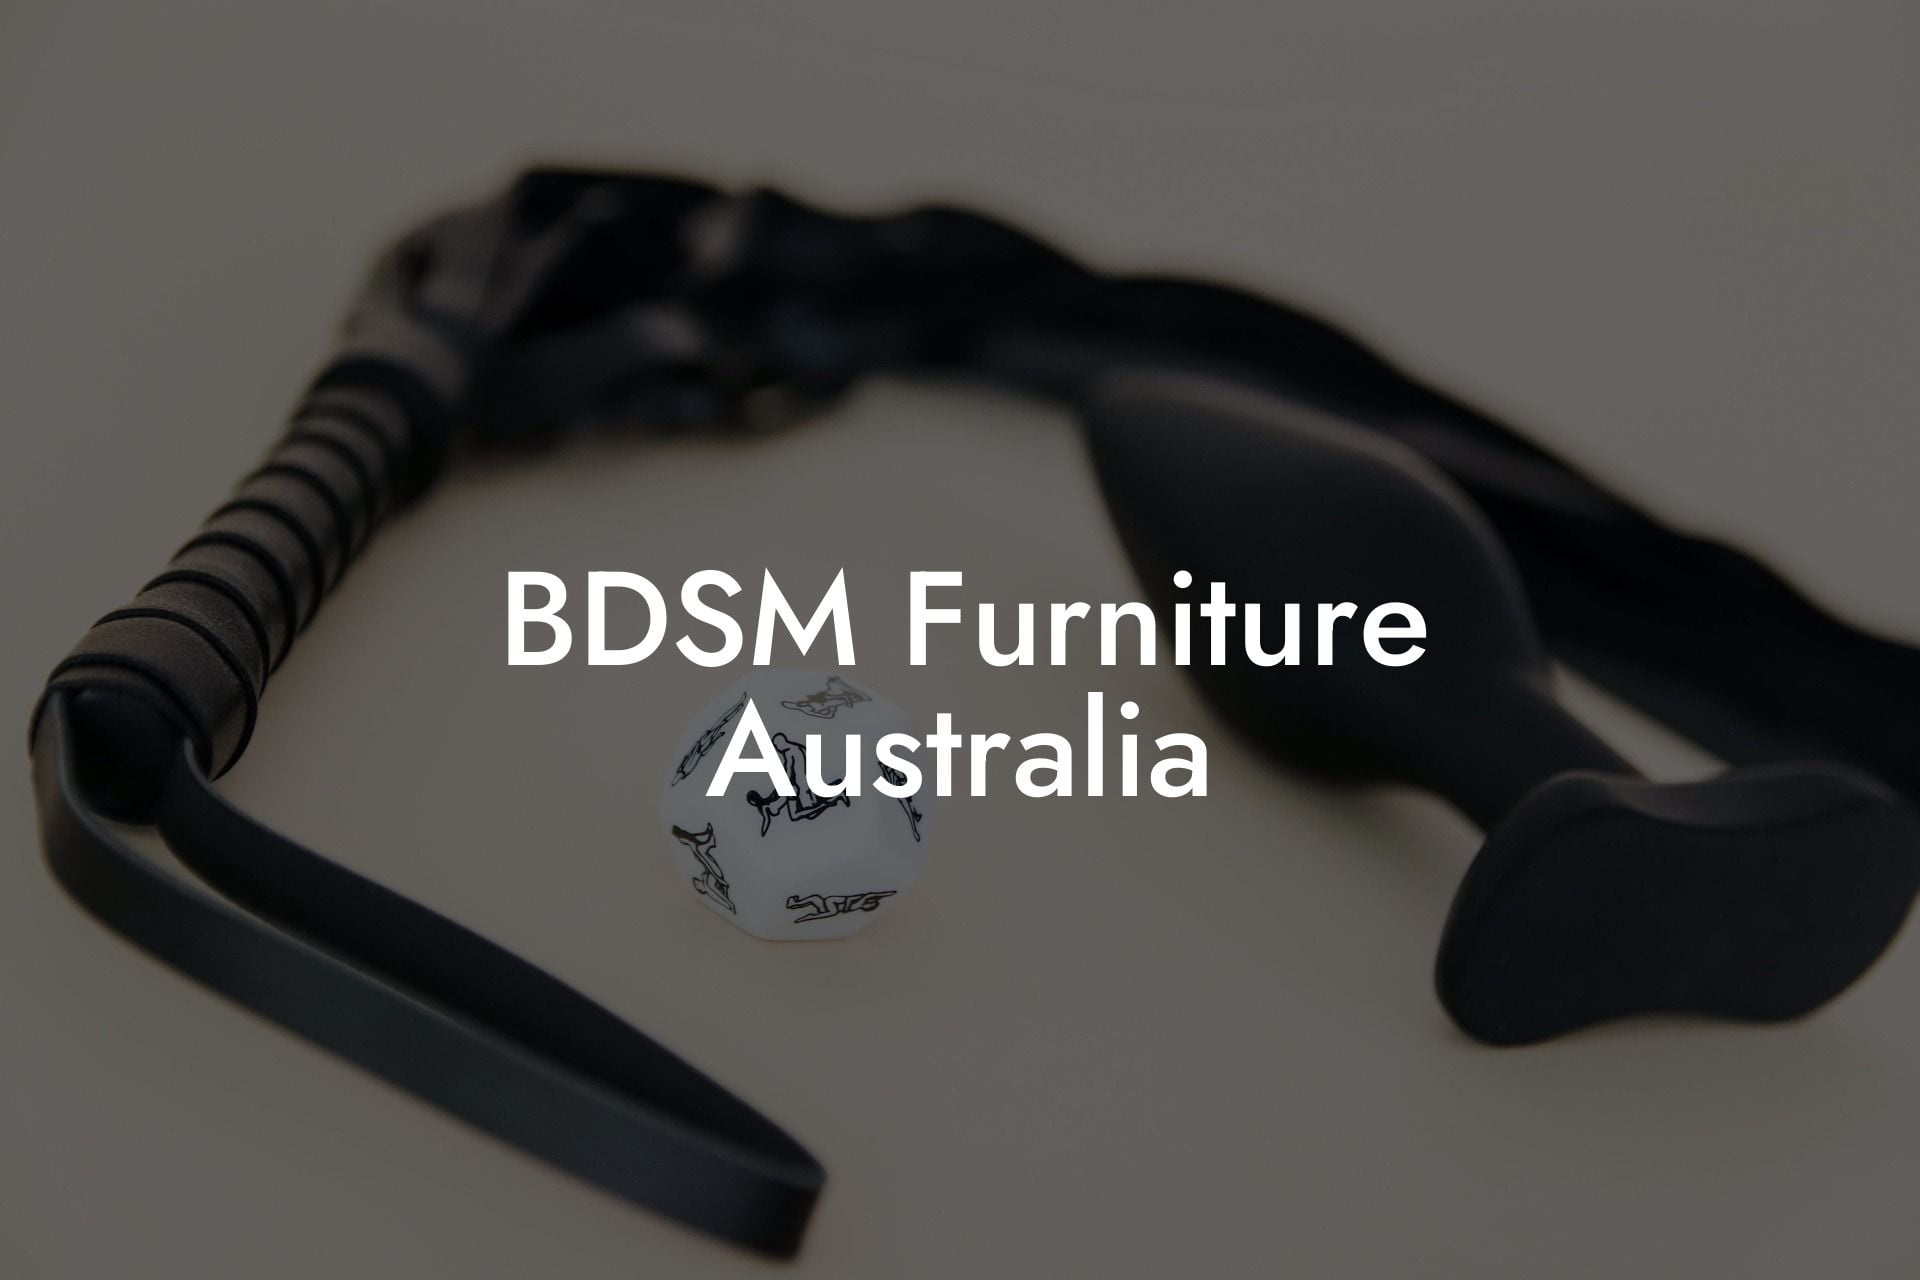 BDSM Furniture Australia